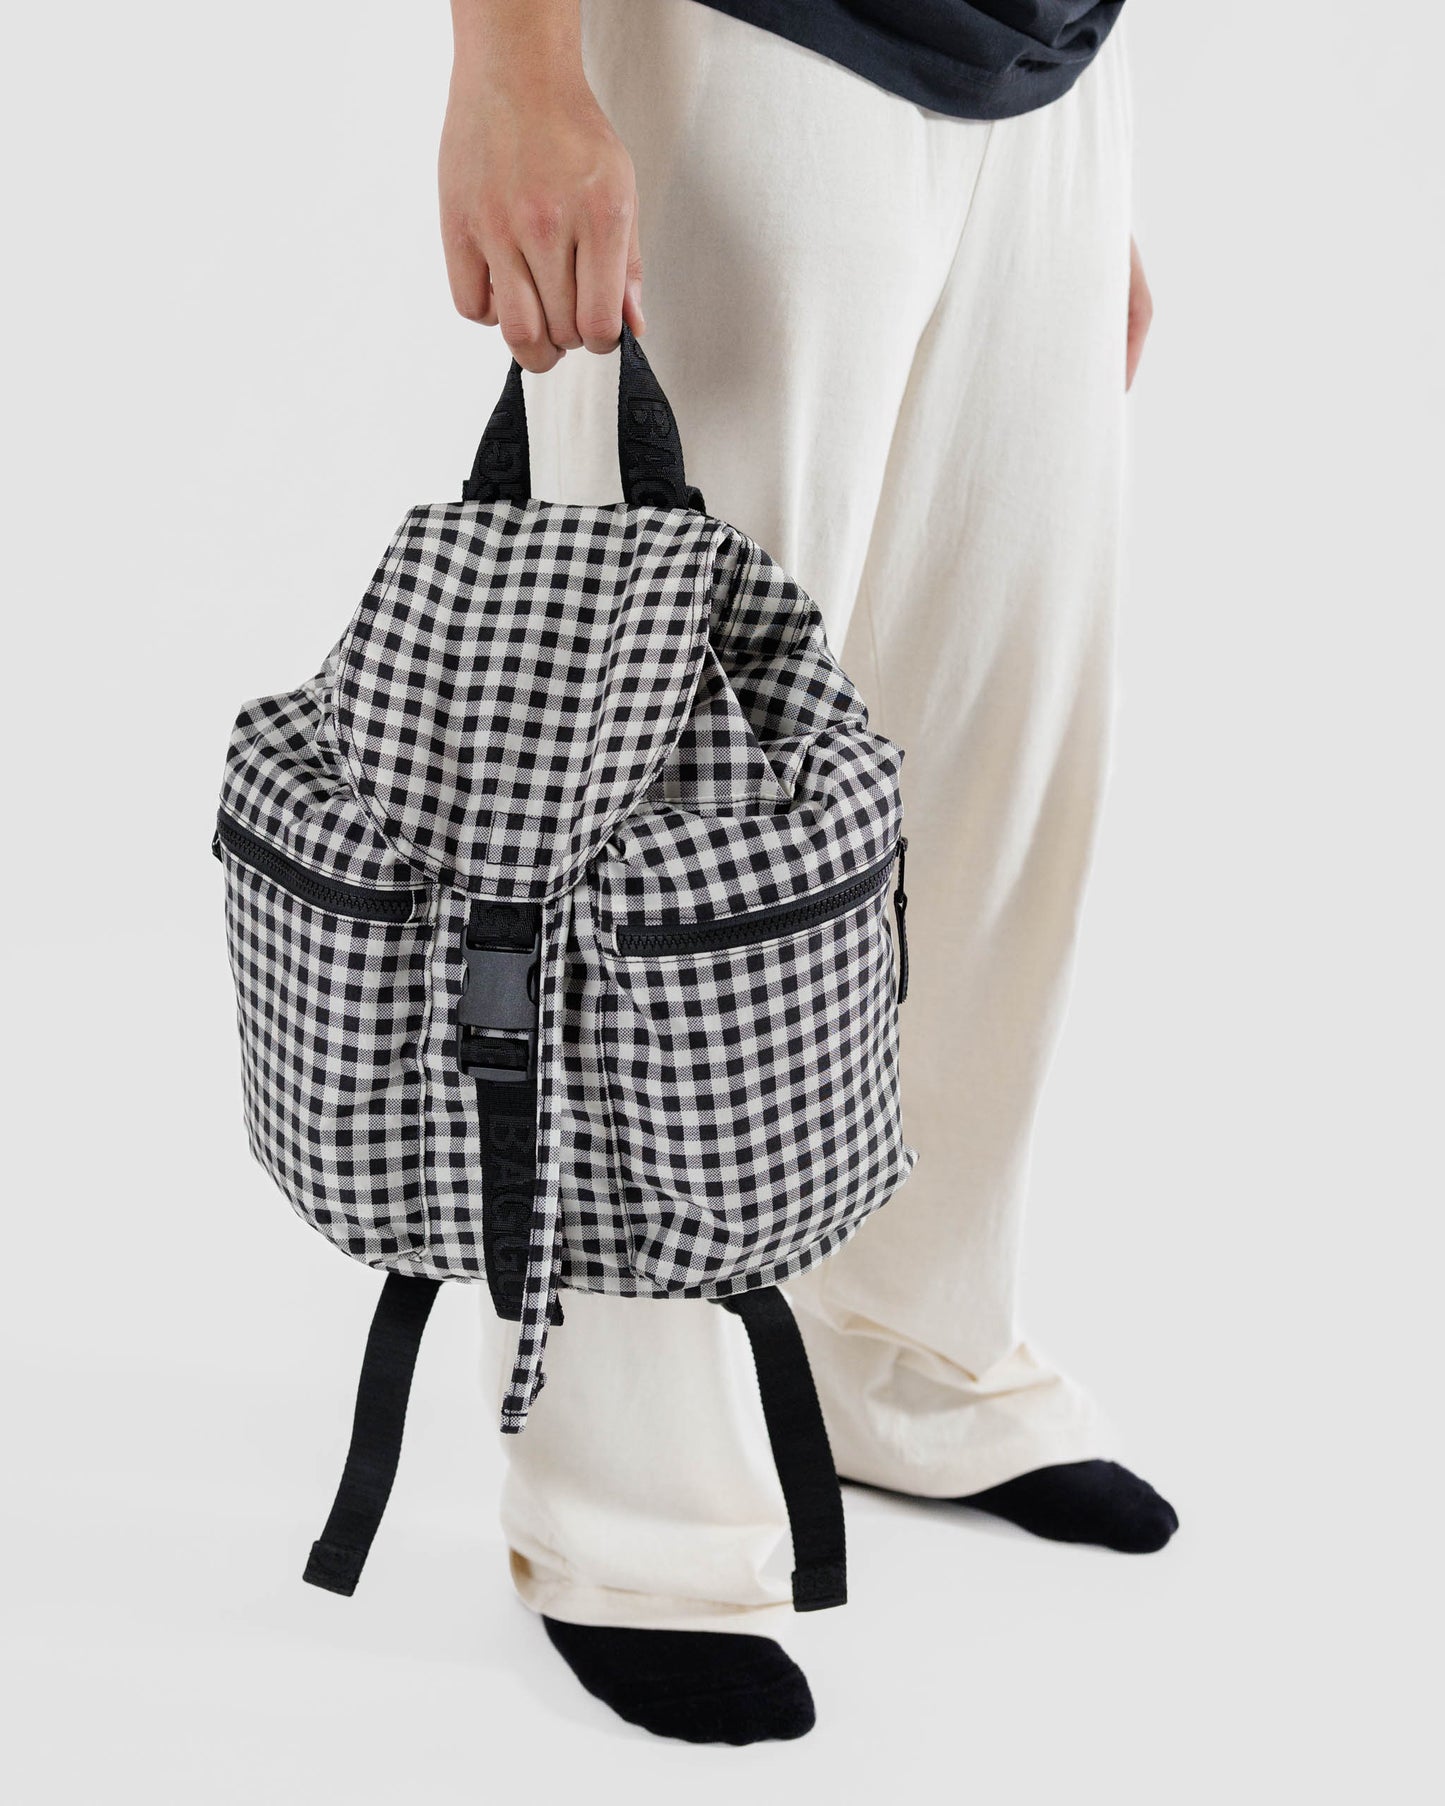 Baggu Sport Backpack - Black & White Gingham